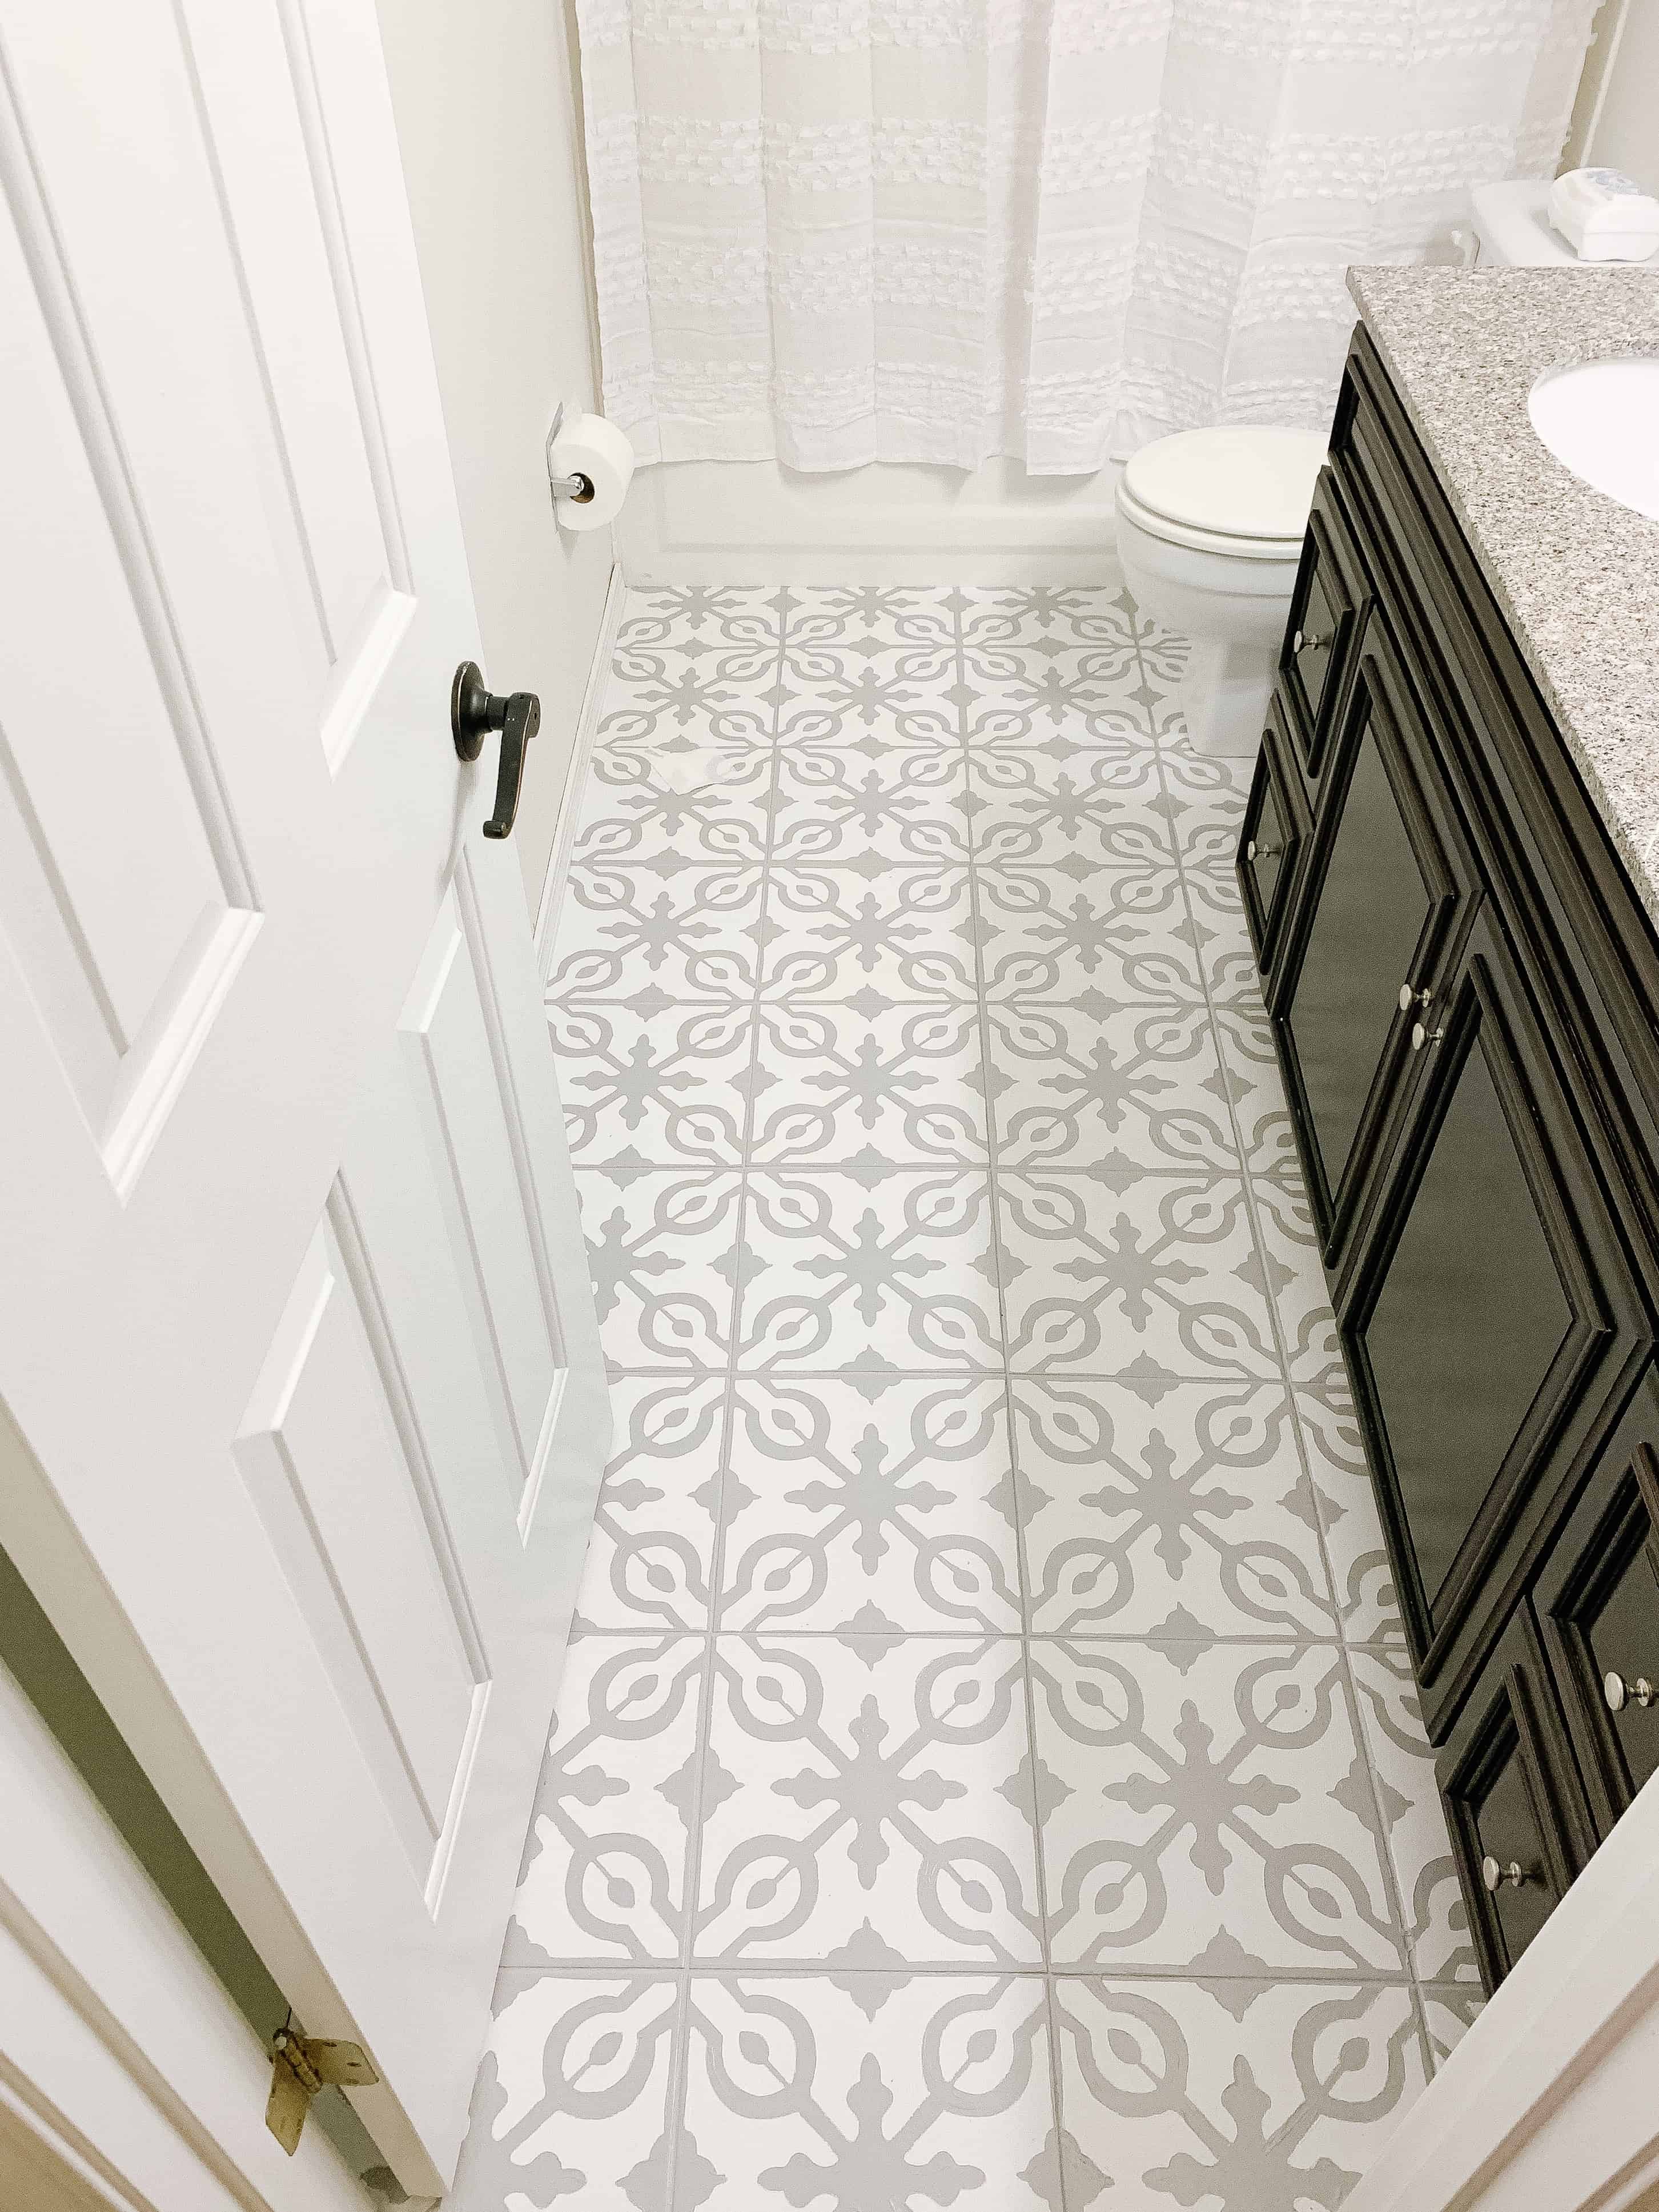 How To Paint Tile Floors Arinsolangeathome,How To Tile A Bathroom Floor Video